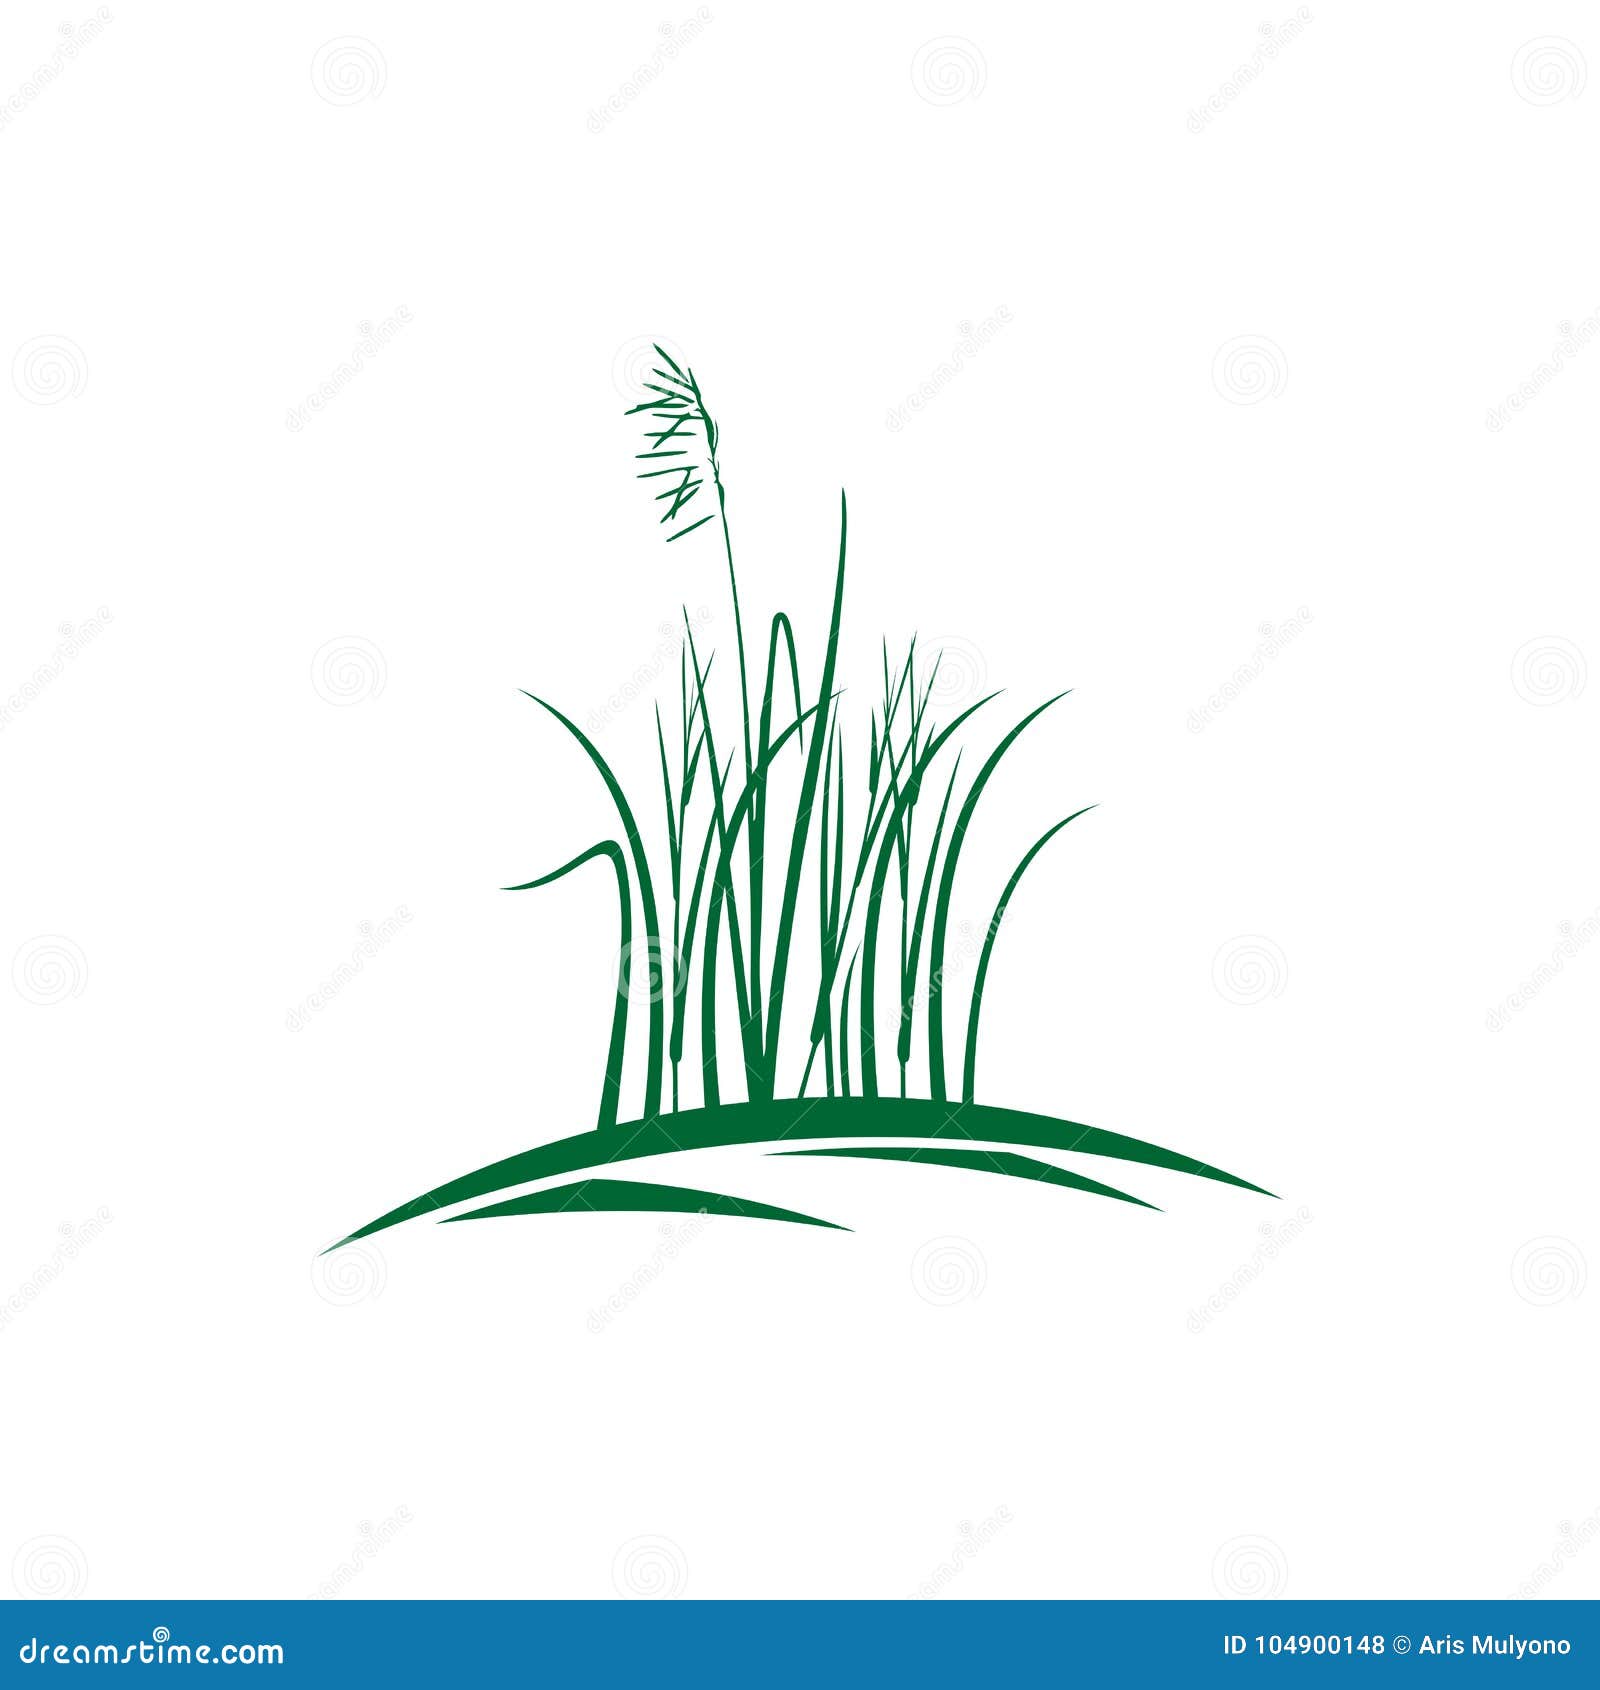 Green Grass Border Clipart stock illustration. Illustration of ...